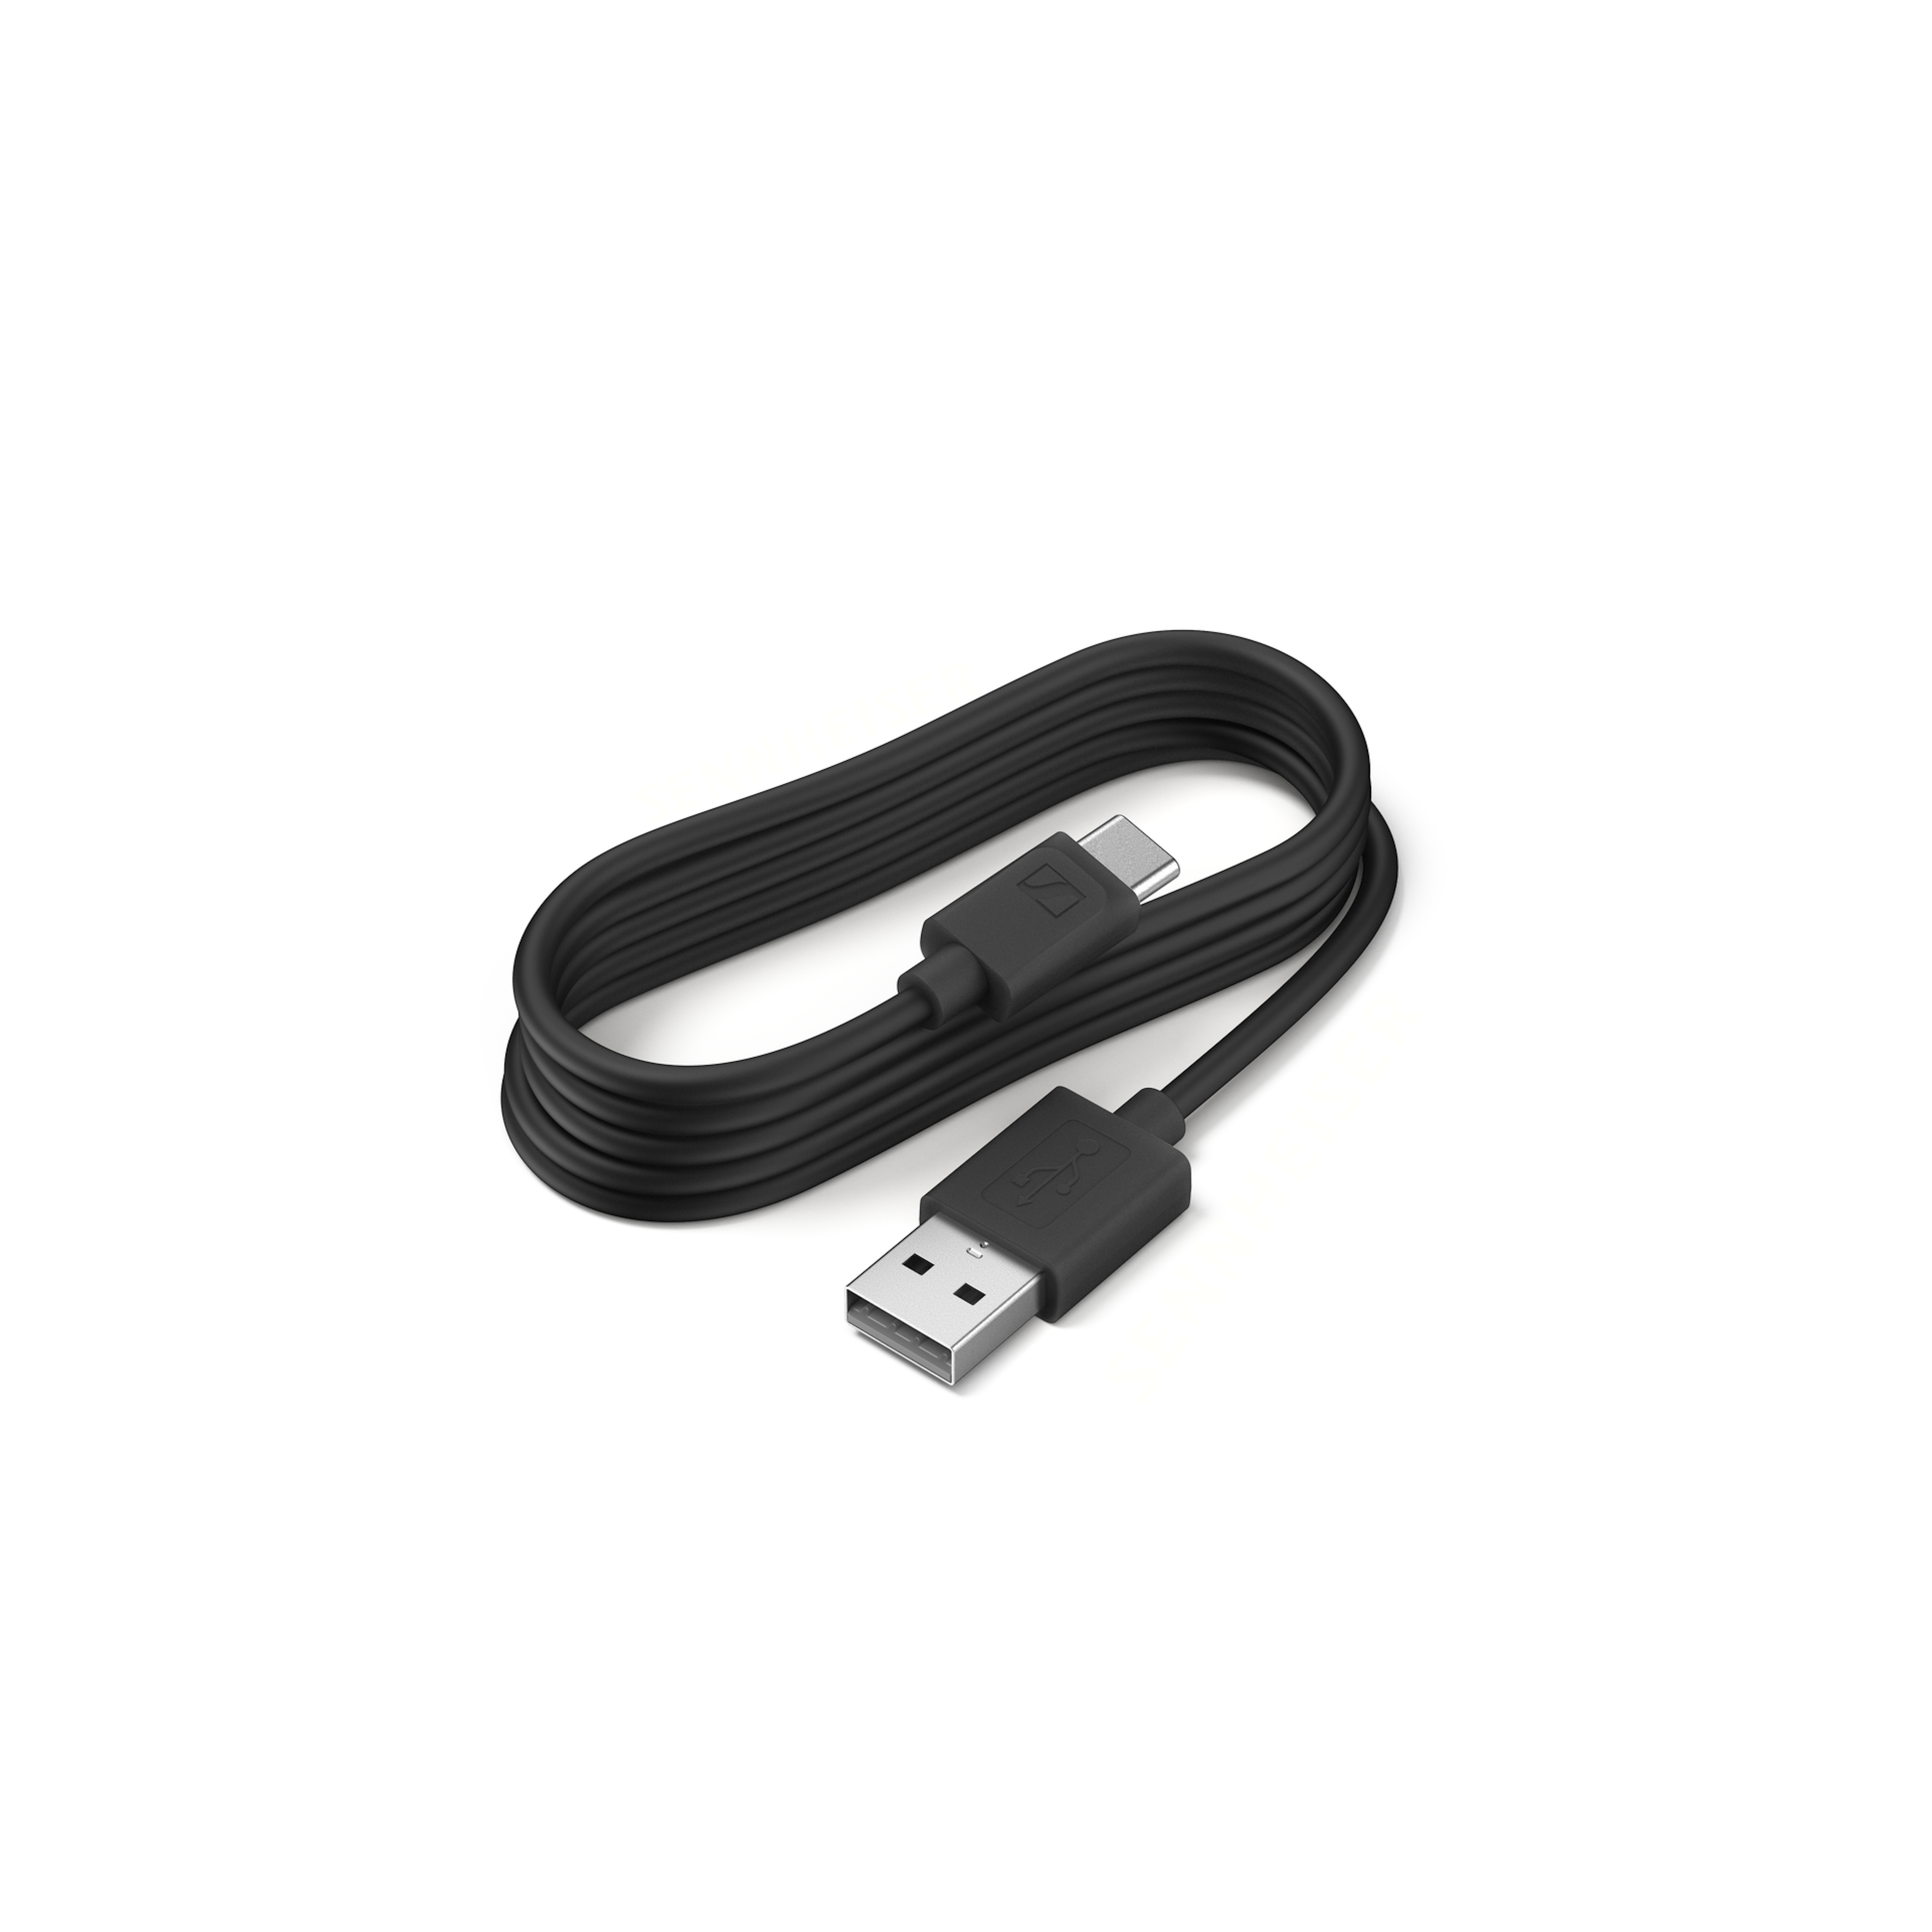 MOMENTUM 4 USB-C Cable Black